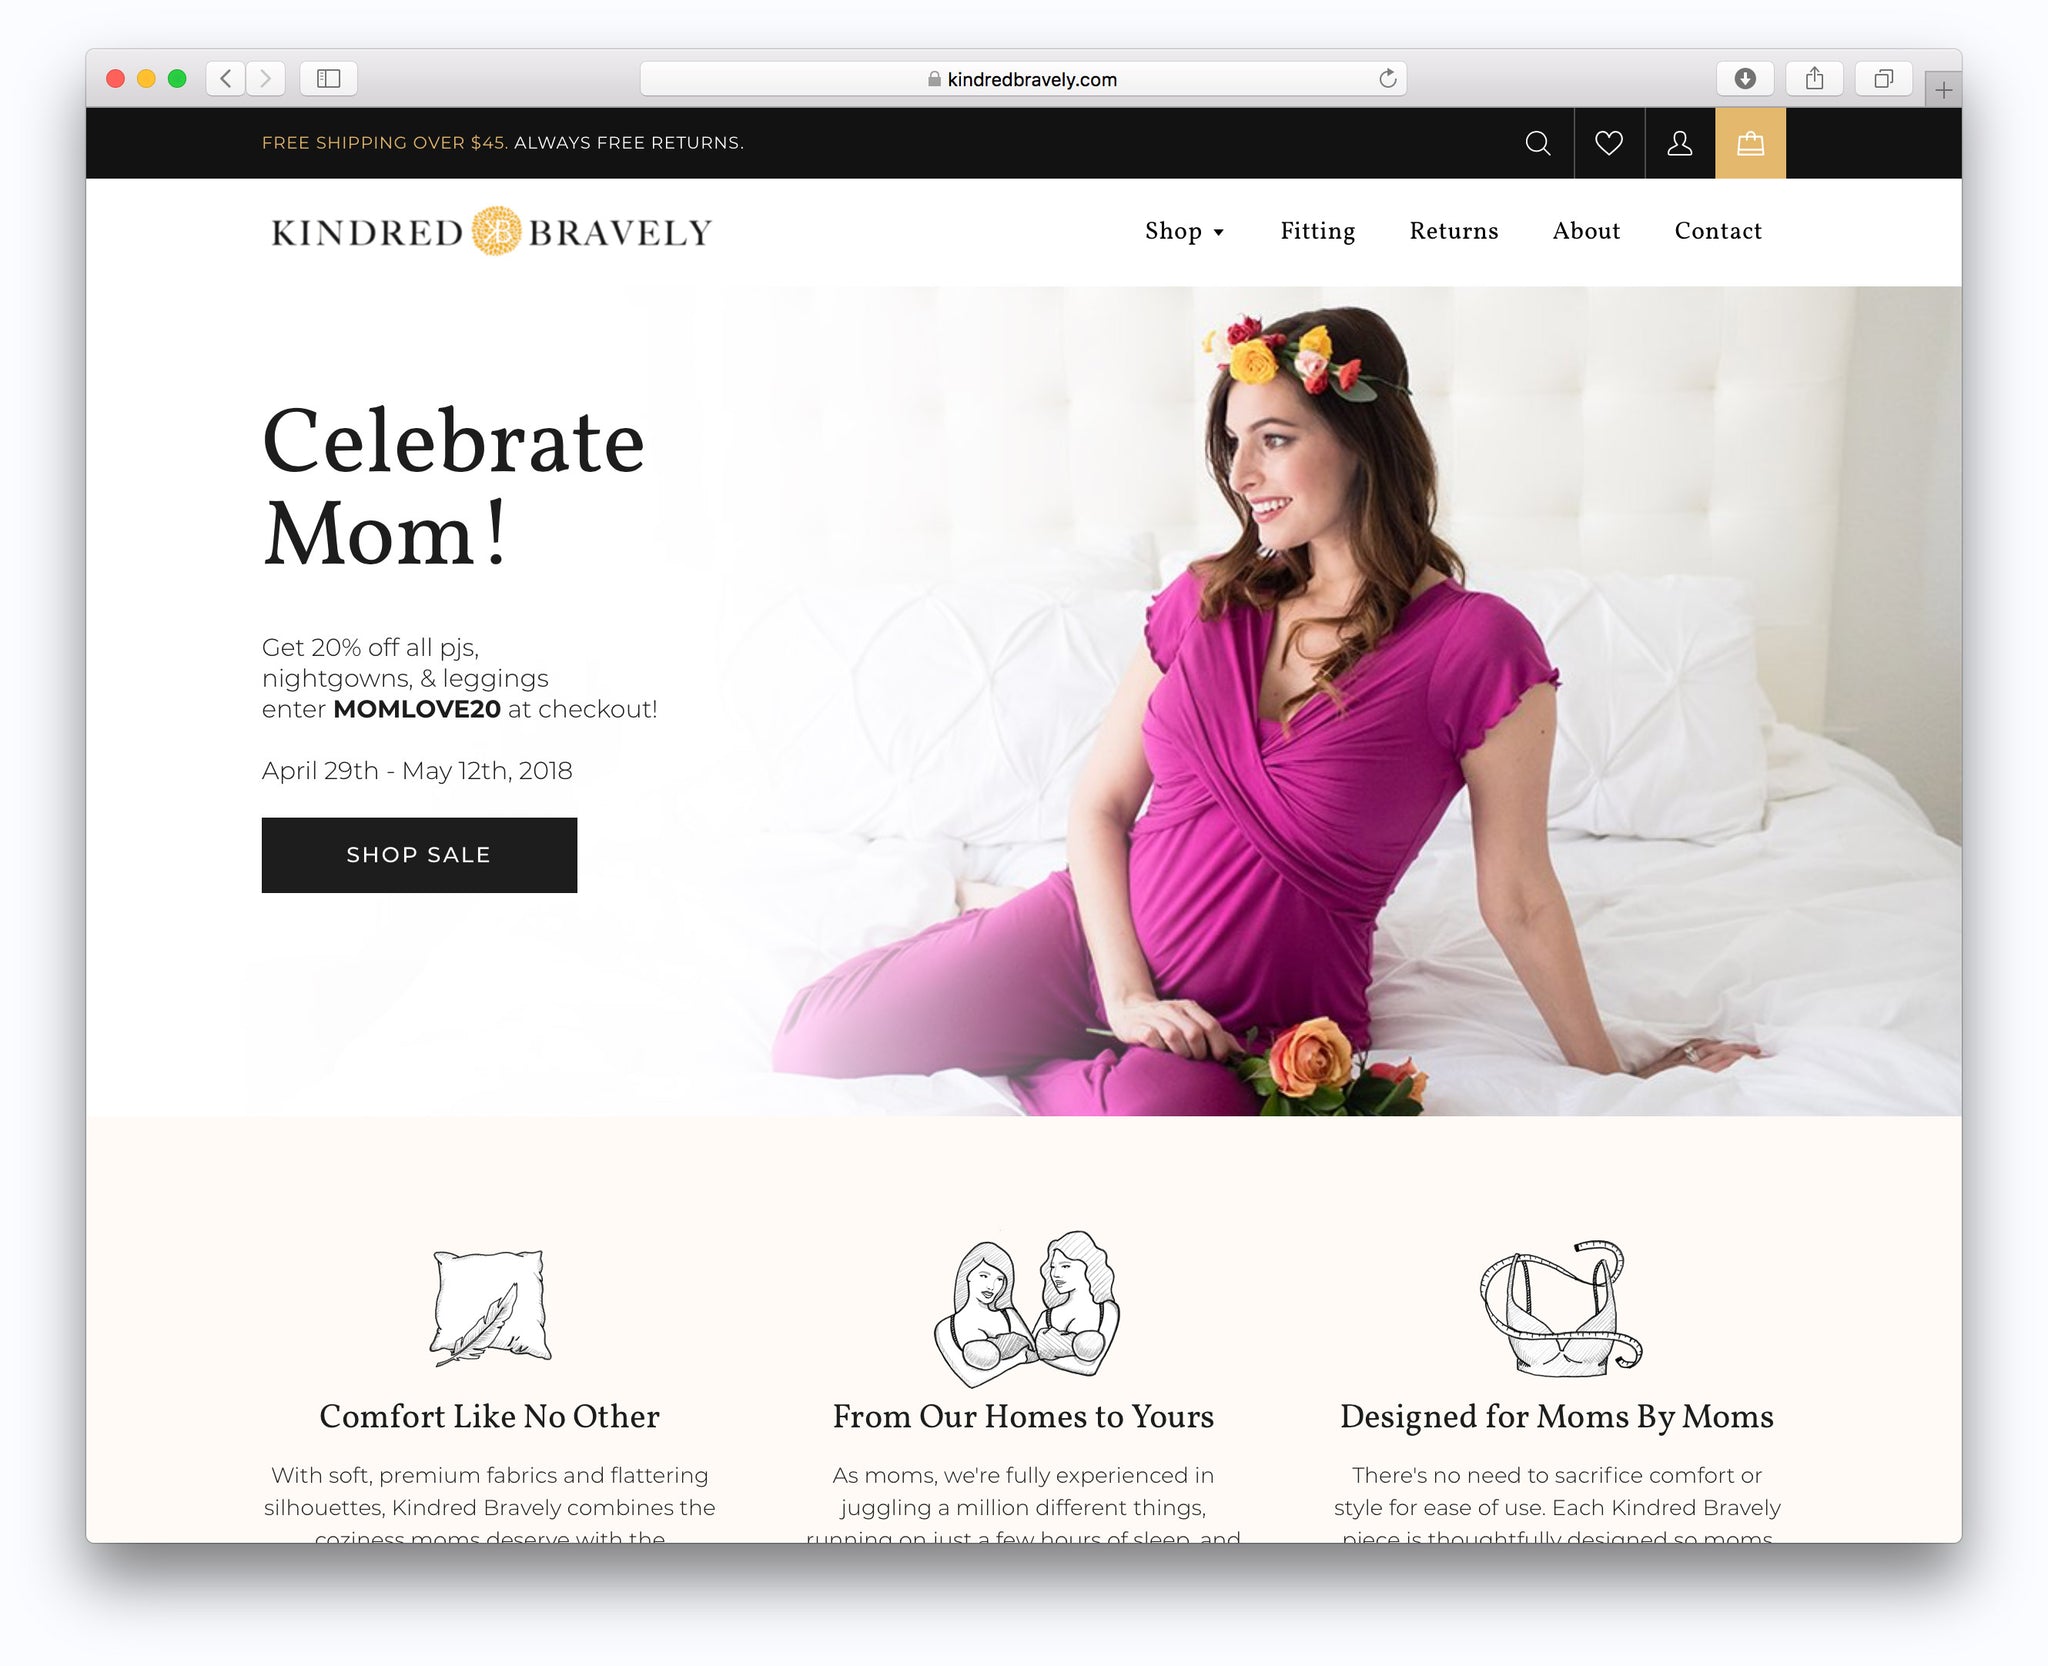 Maternity and Nursing Wear: Kindred Bravely – Shop Team Pro LLC